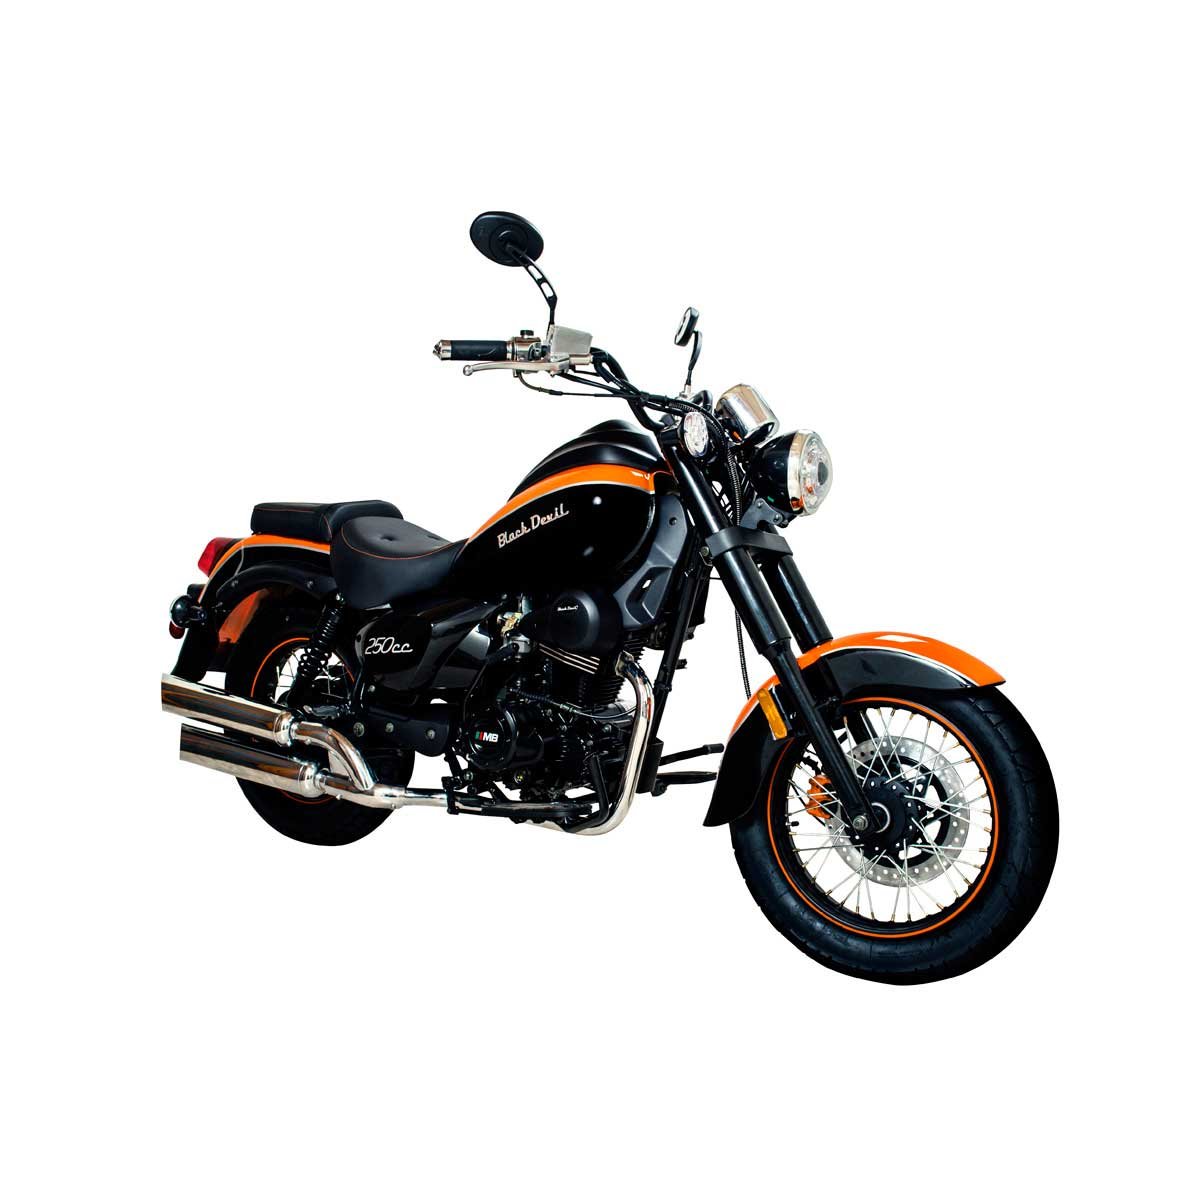 Motocicleta Black Devil Naranja 250Cc 2020 Mb